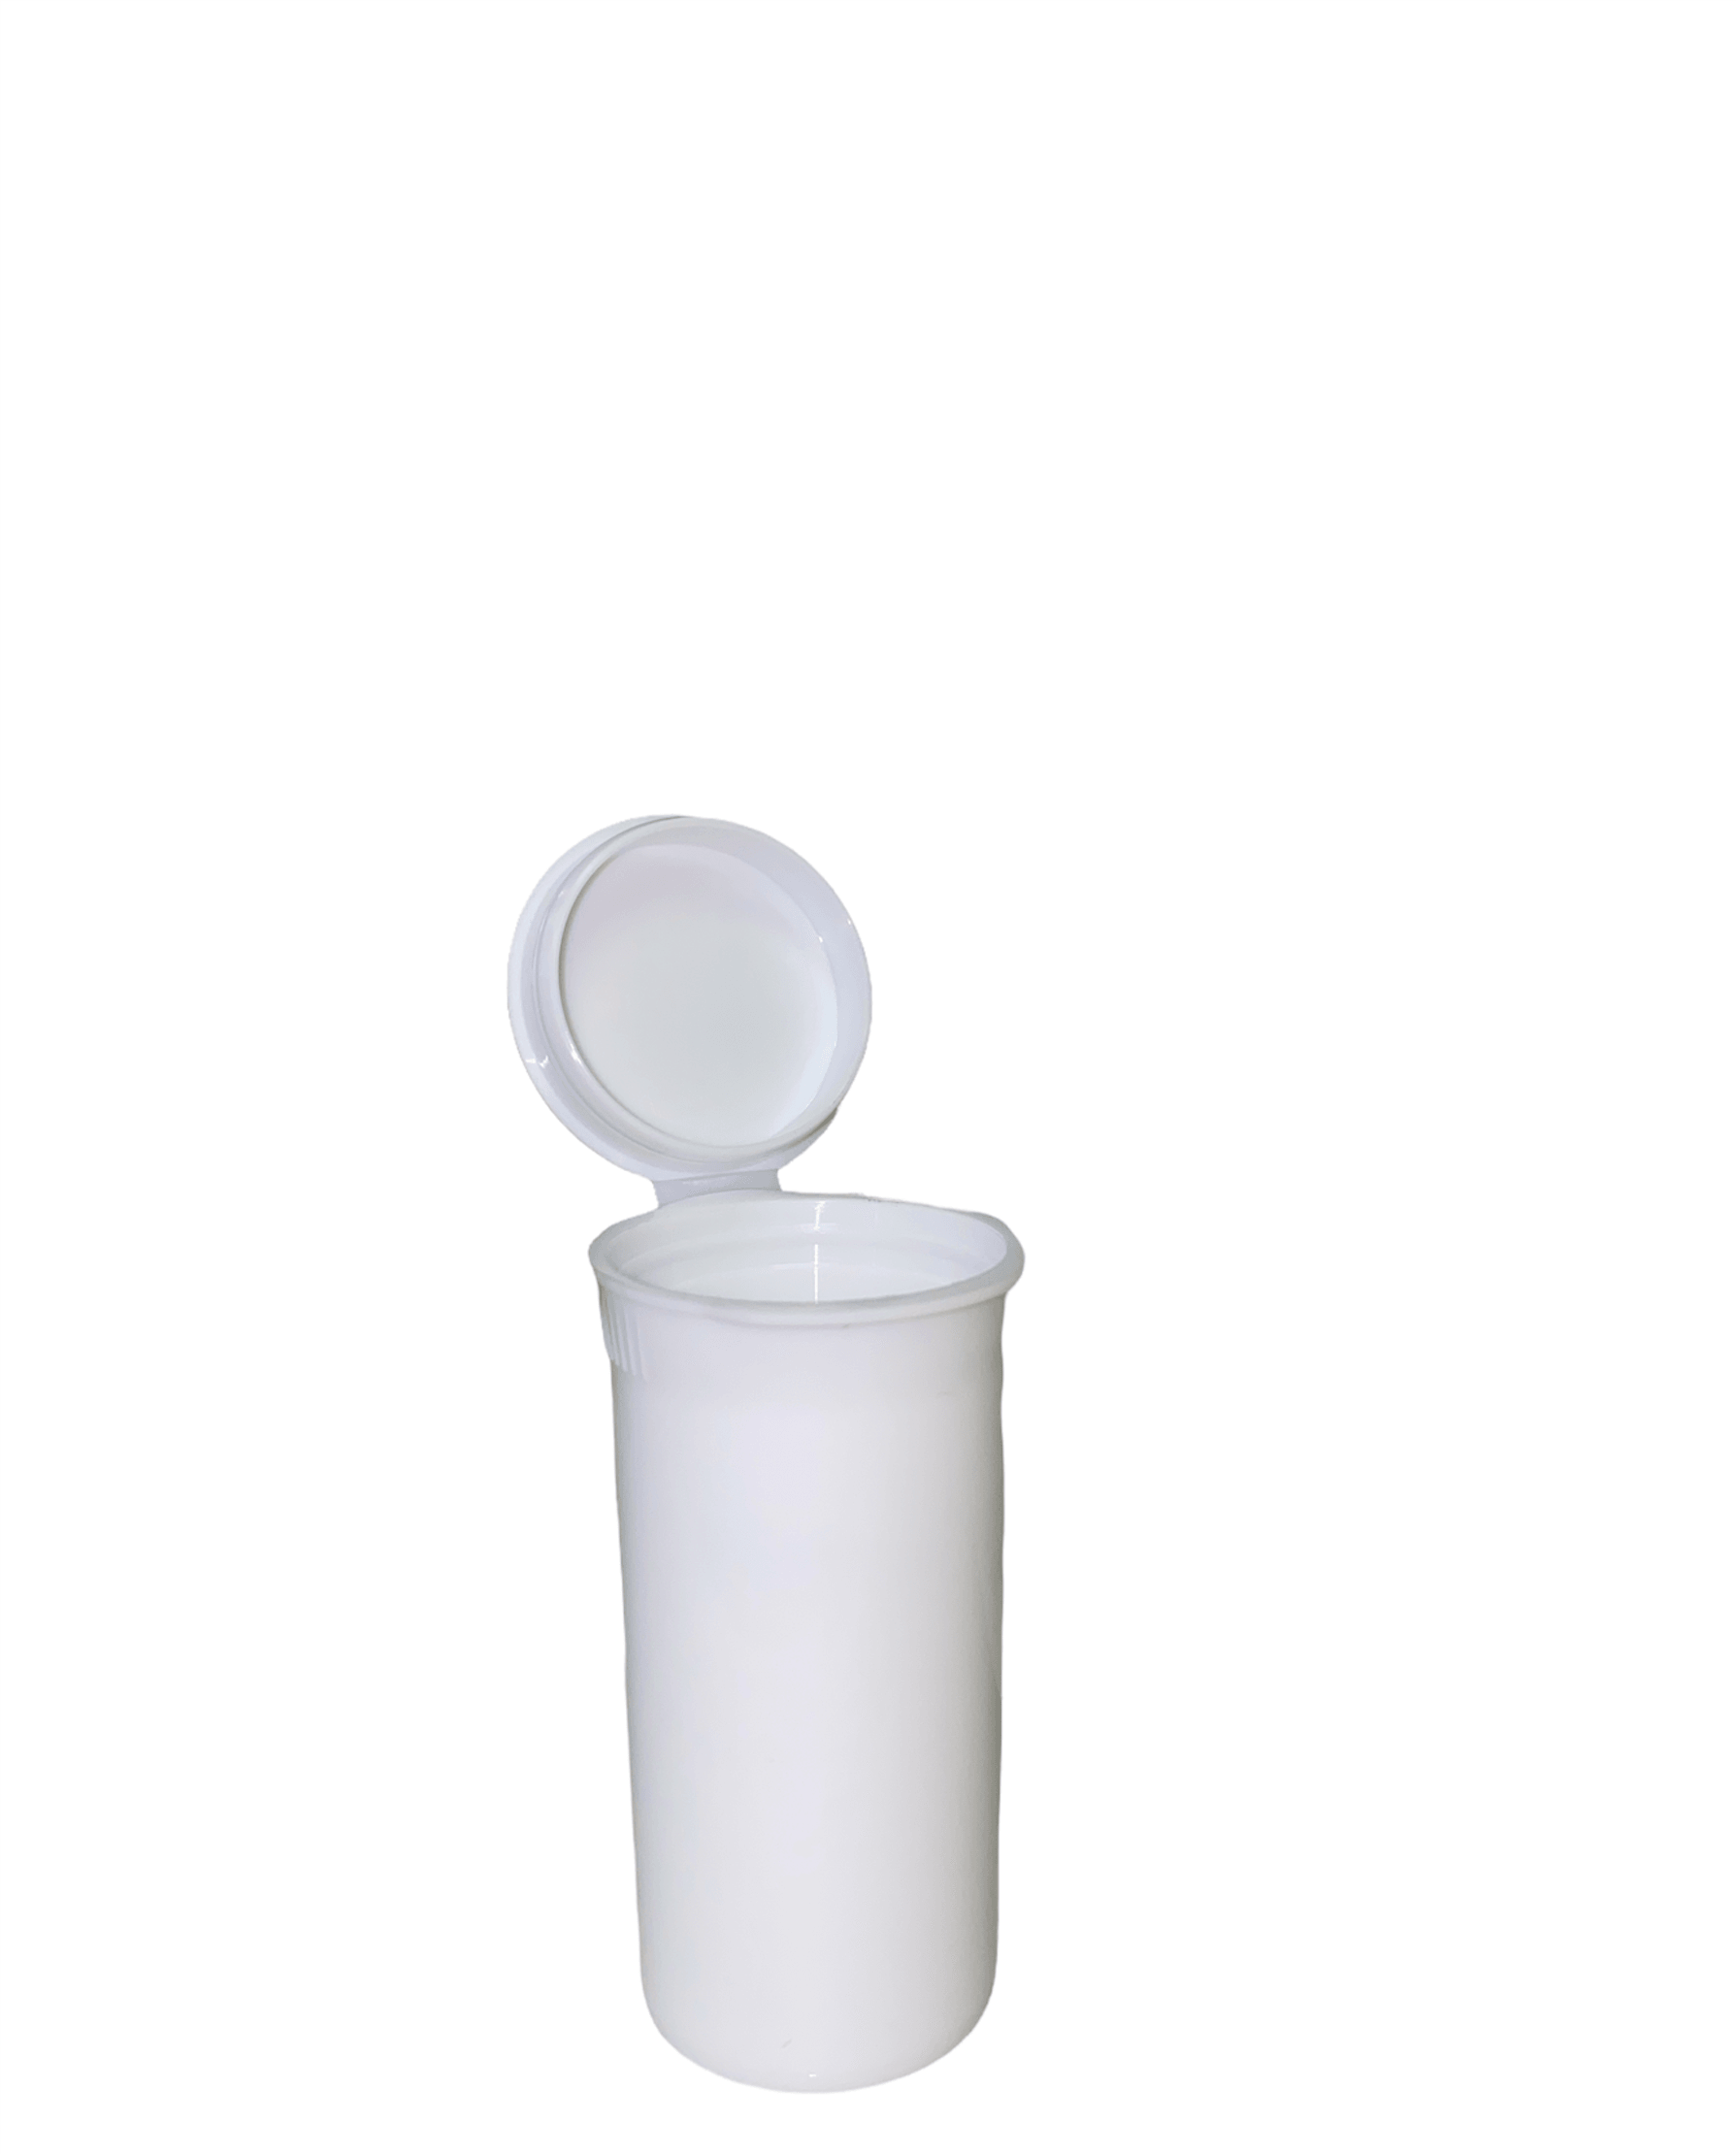 19 Dram Opaque Aqua Child Resistant Pop-Top Bottles